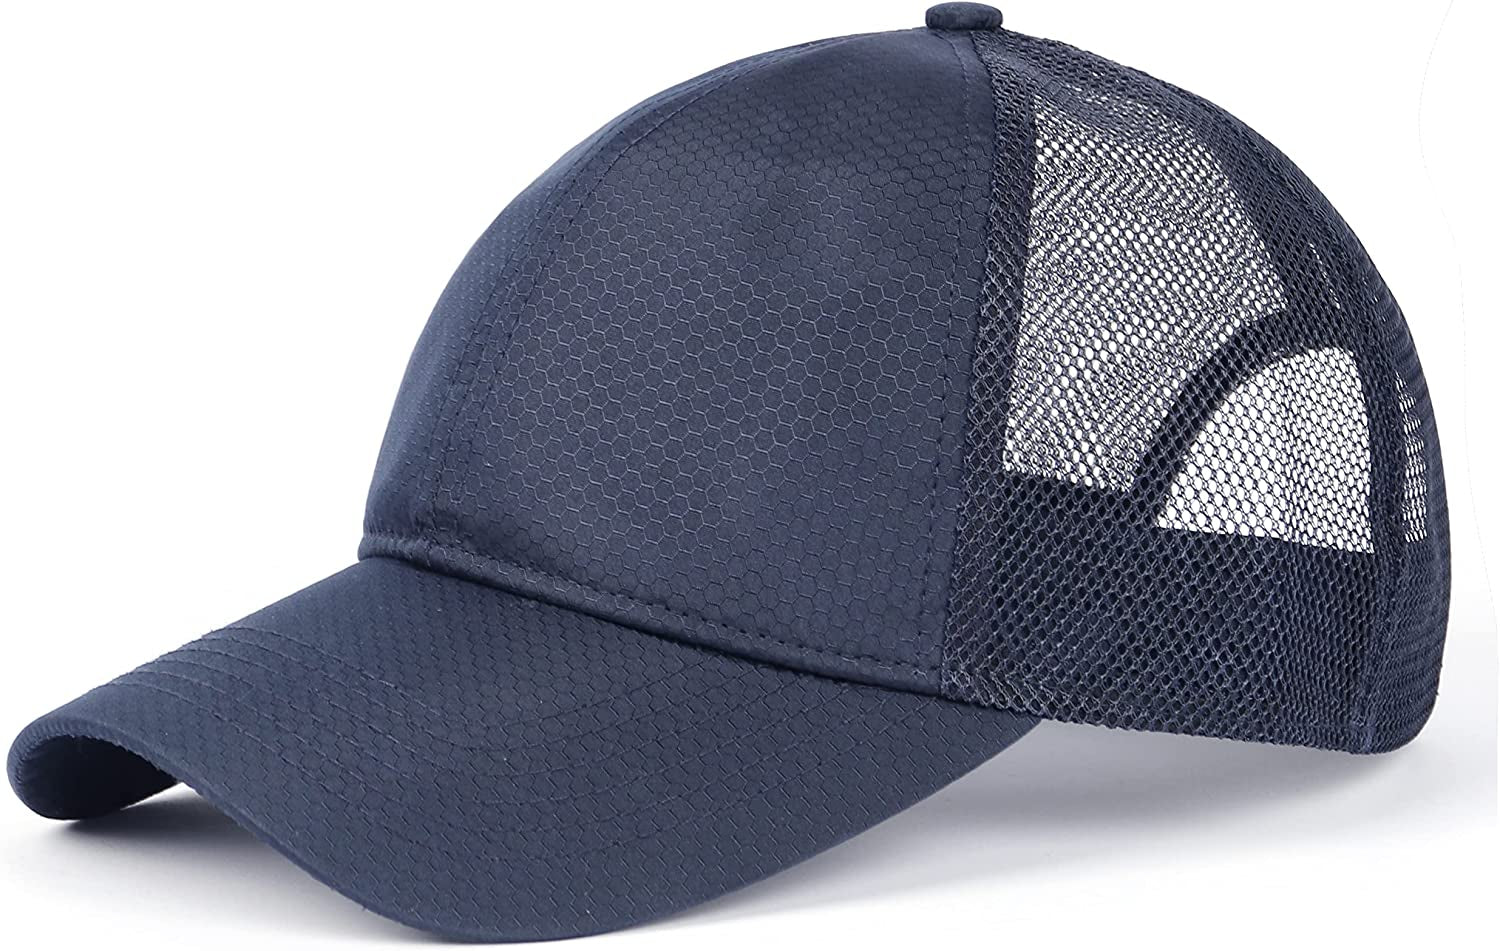  XXL Oversize Trucker Caps,Adjustable Running Hats for Big Heads,Large Lightweight Mesh Back Baseball Cap